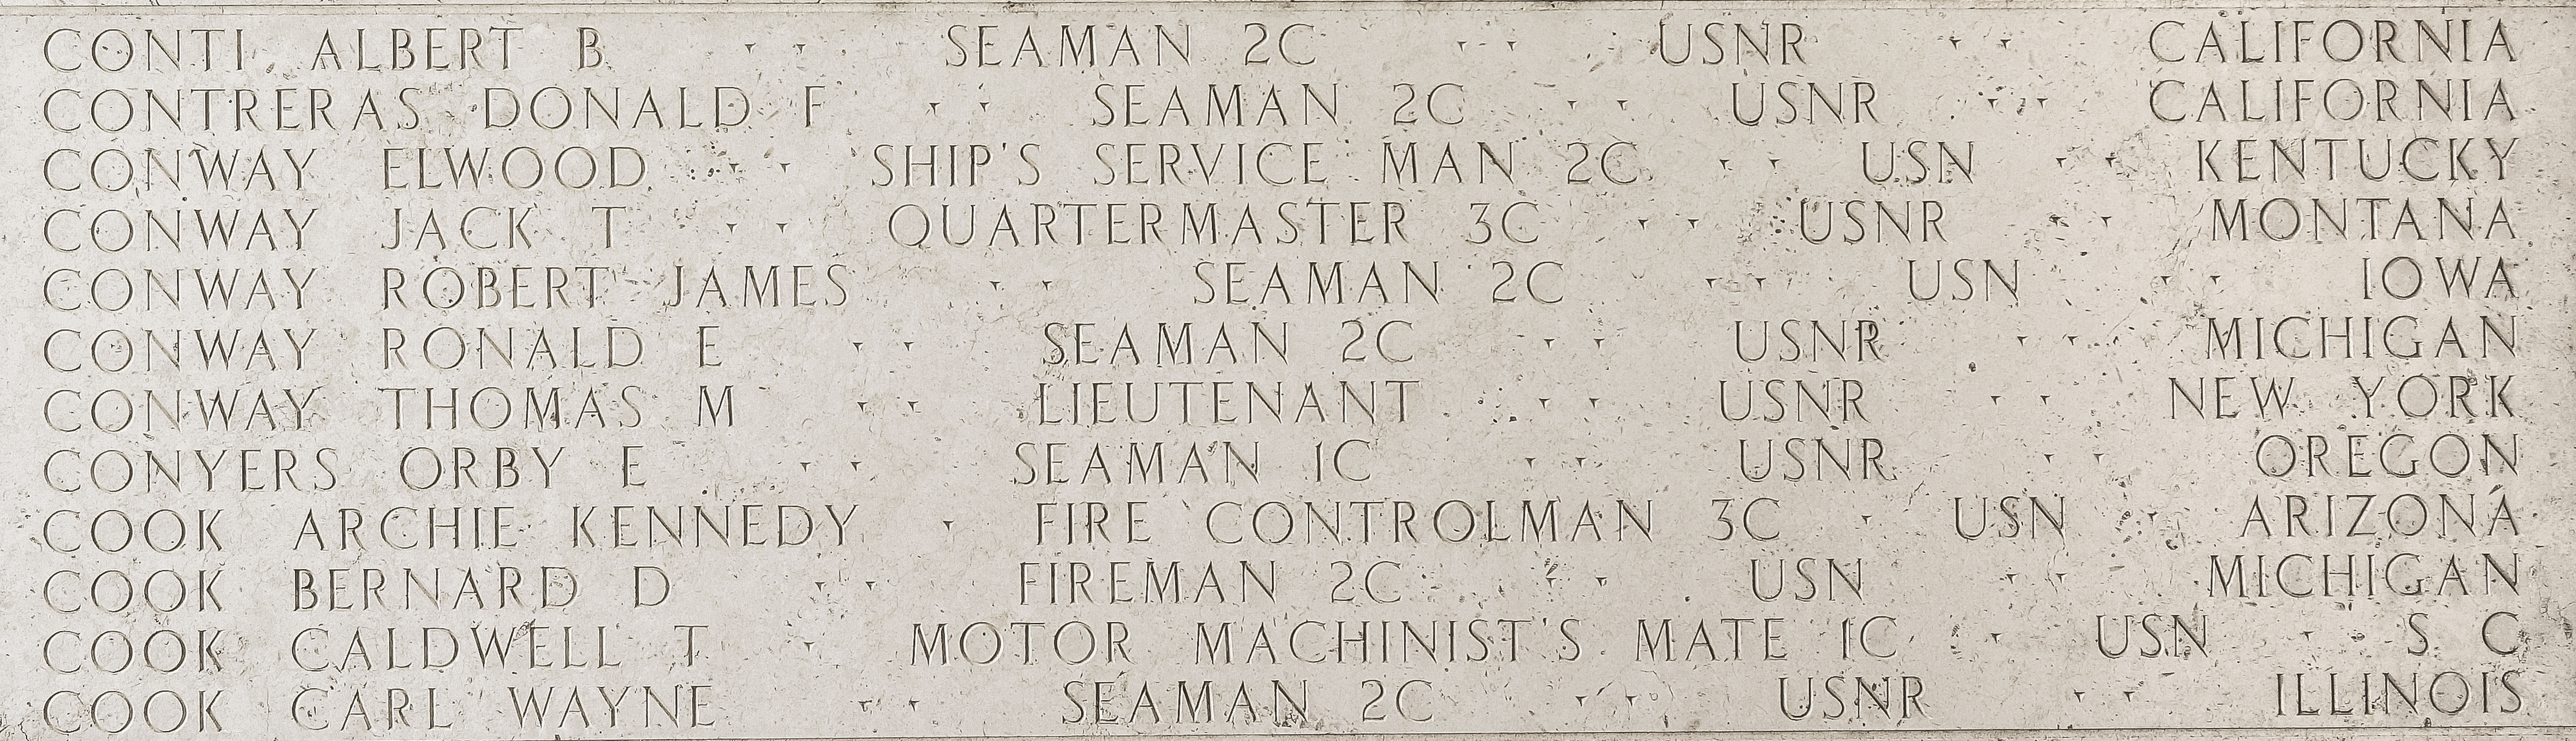 Robert James Conway, Seaman Second Class